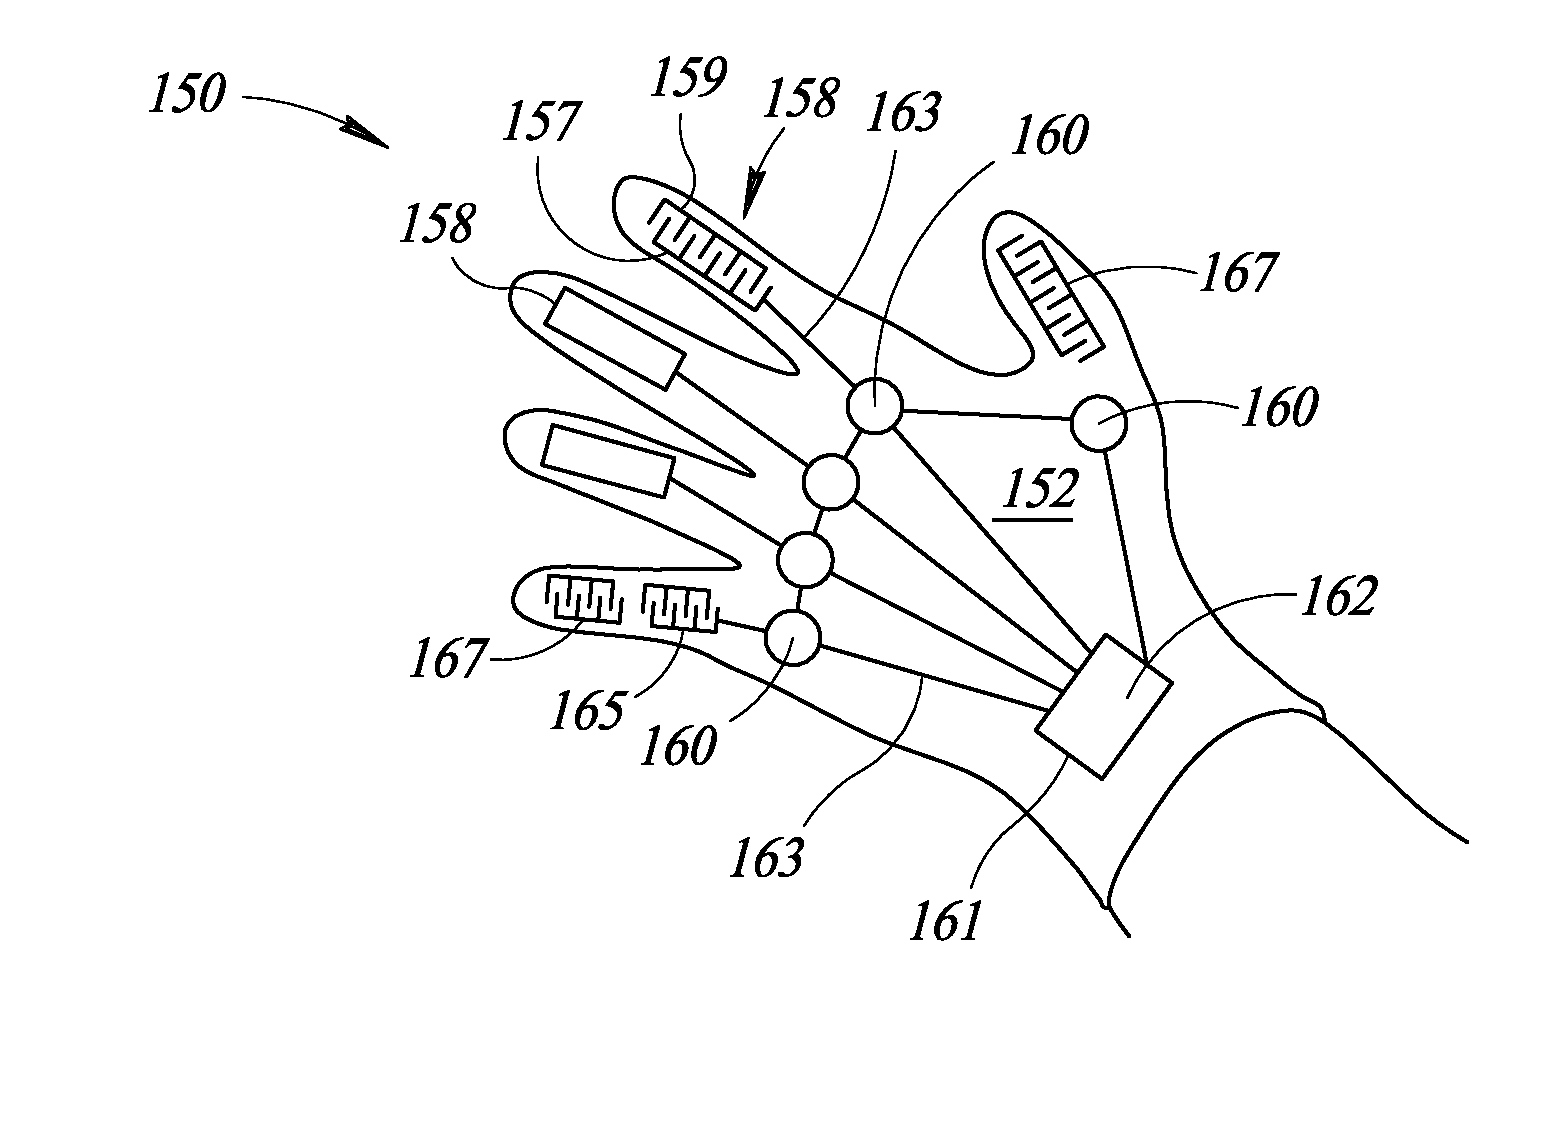 Flexible smart glove